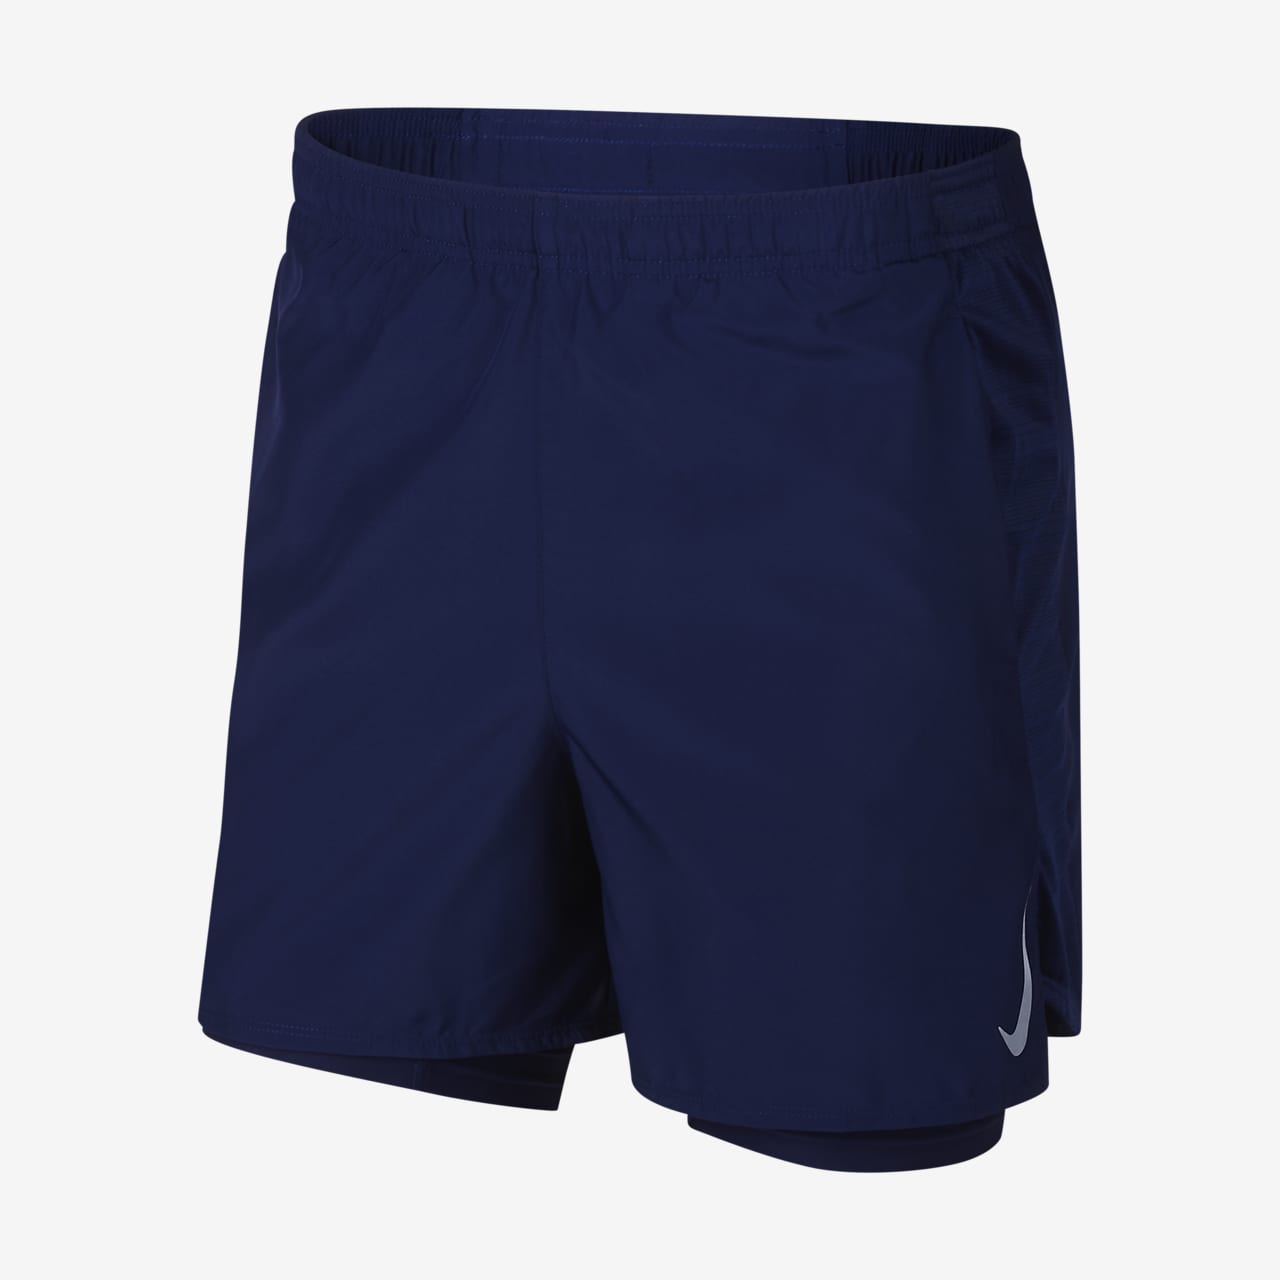 Blue Nike running shorts